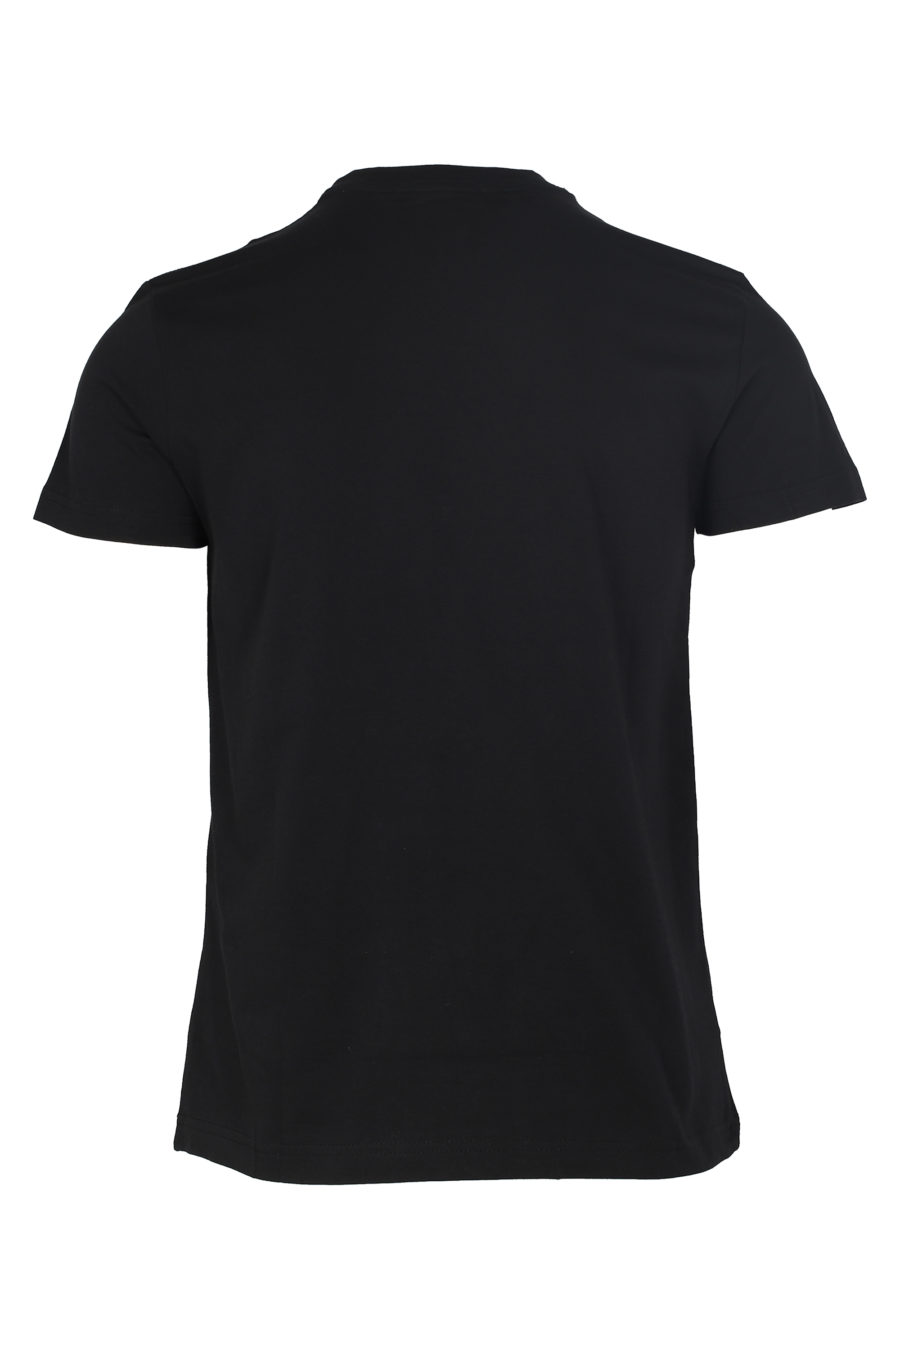 Camiseta negra con logo redondo plateado - IMG 6027